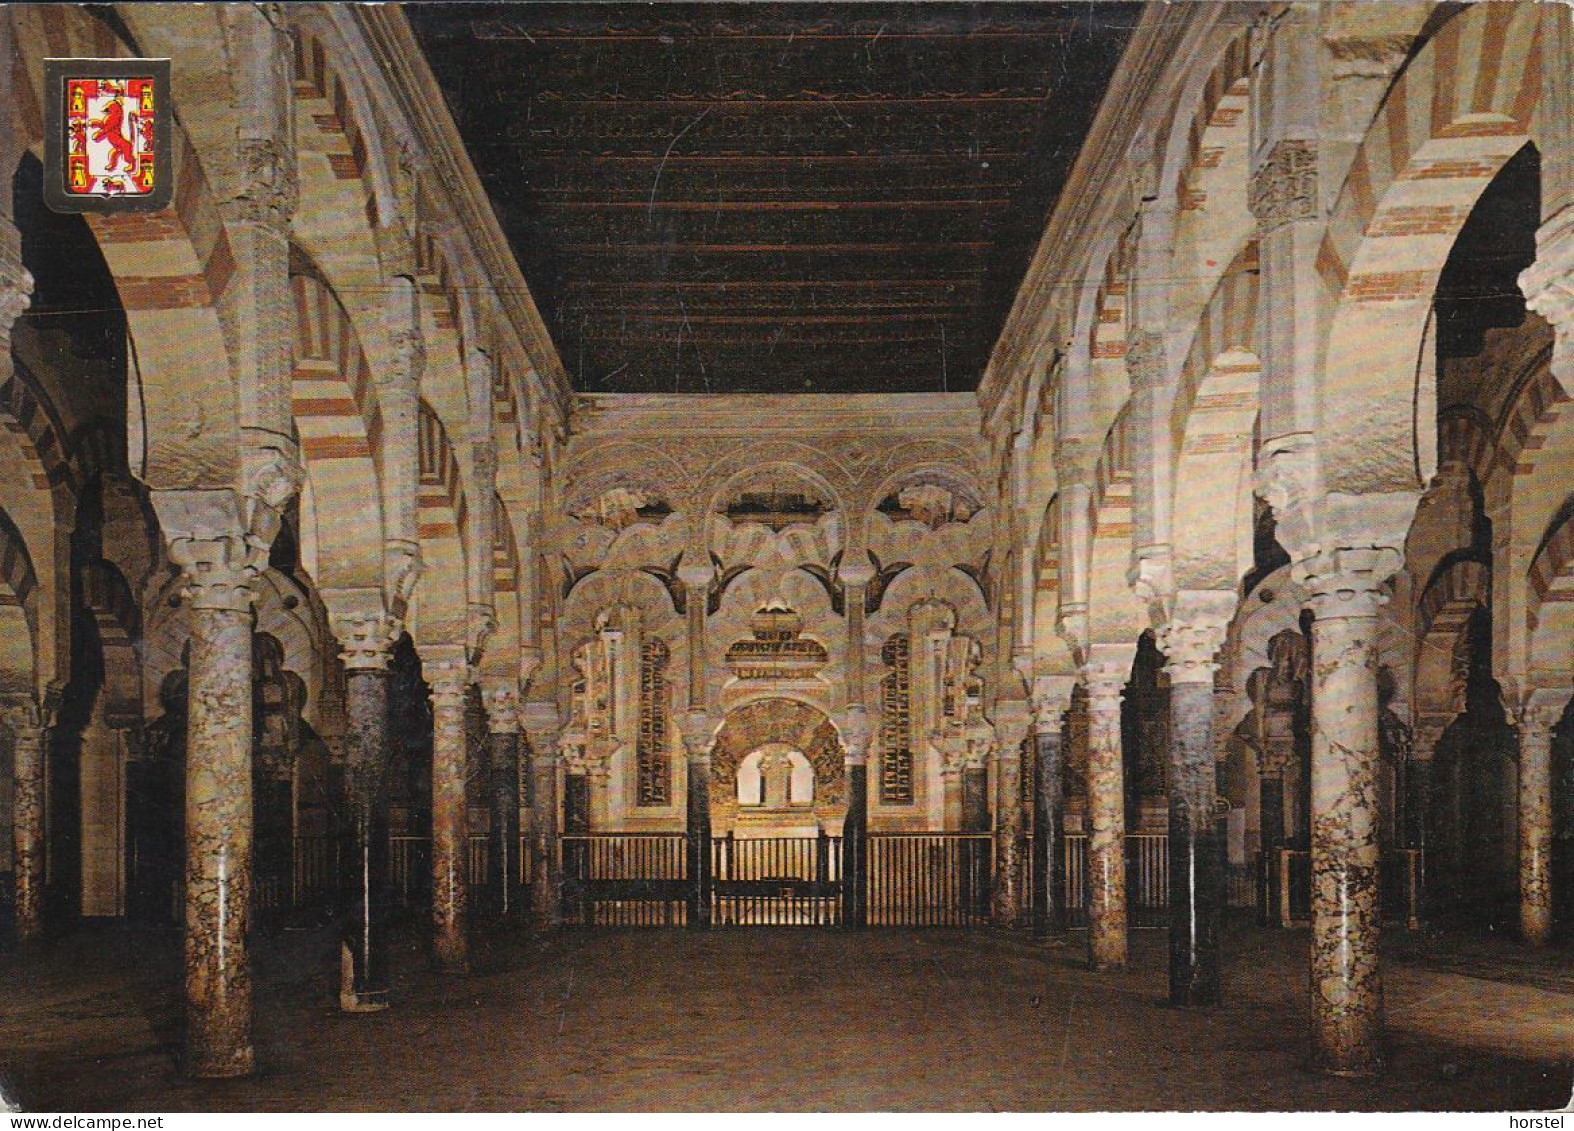 Spanien - Cordoba - Column's Labyrinth And The Mihrad - Córdoba